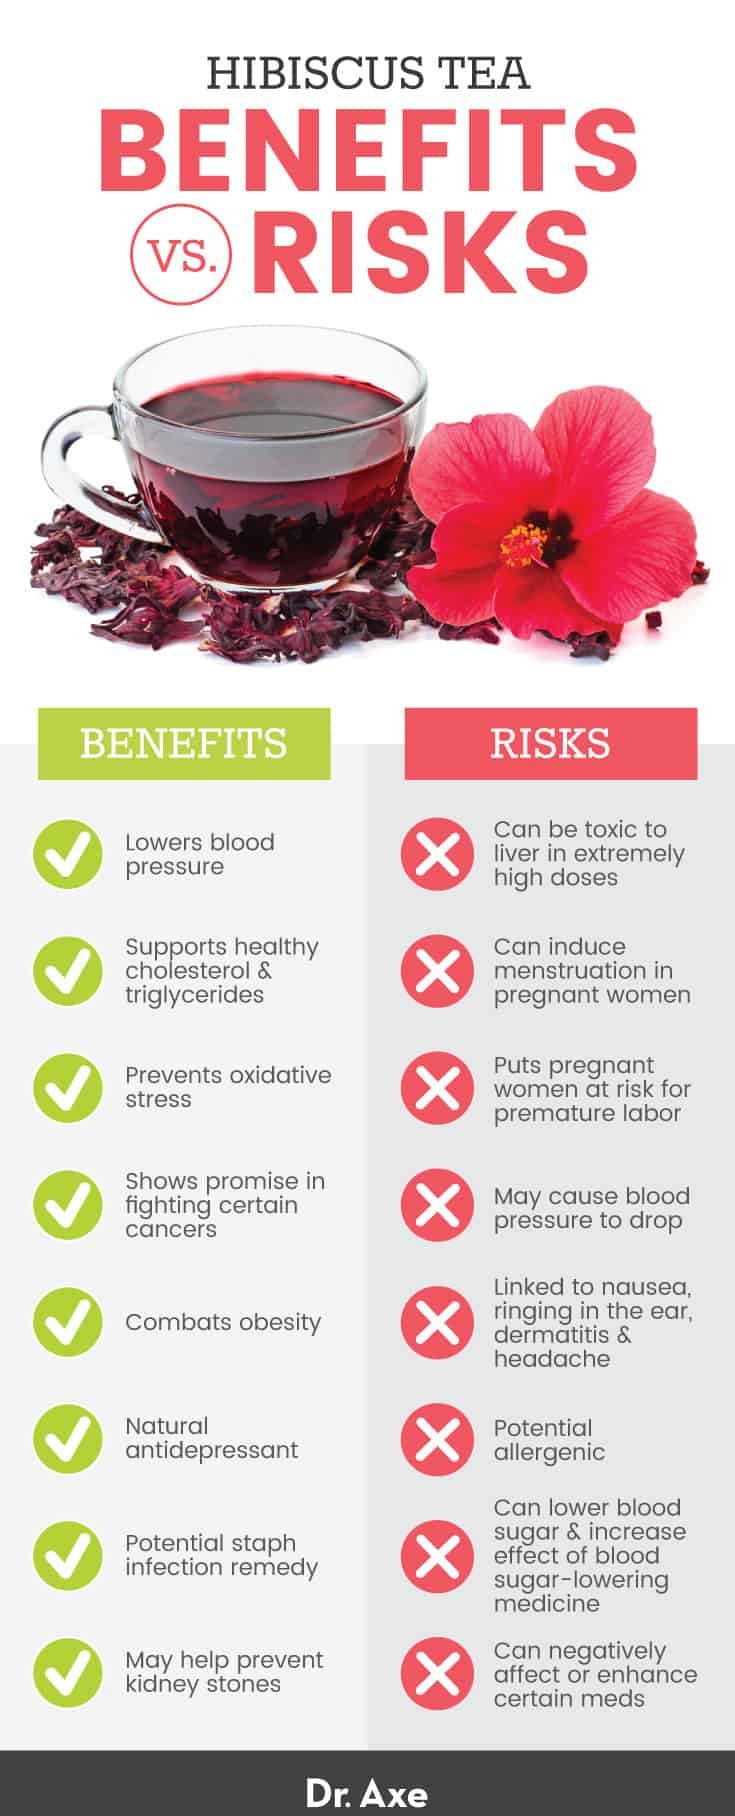 Hibiscus tea benefits vs. risks - Dr. Axe